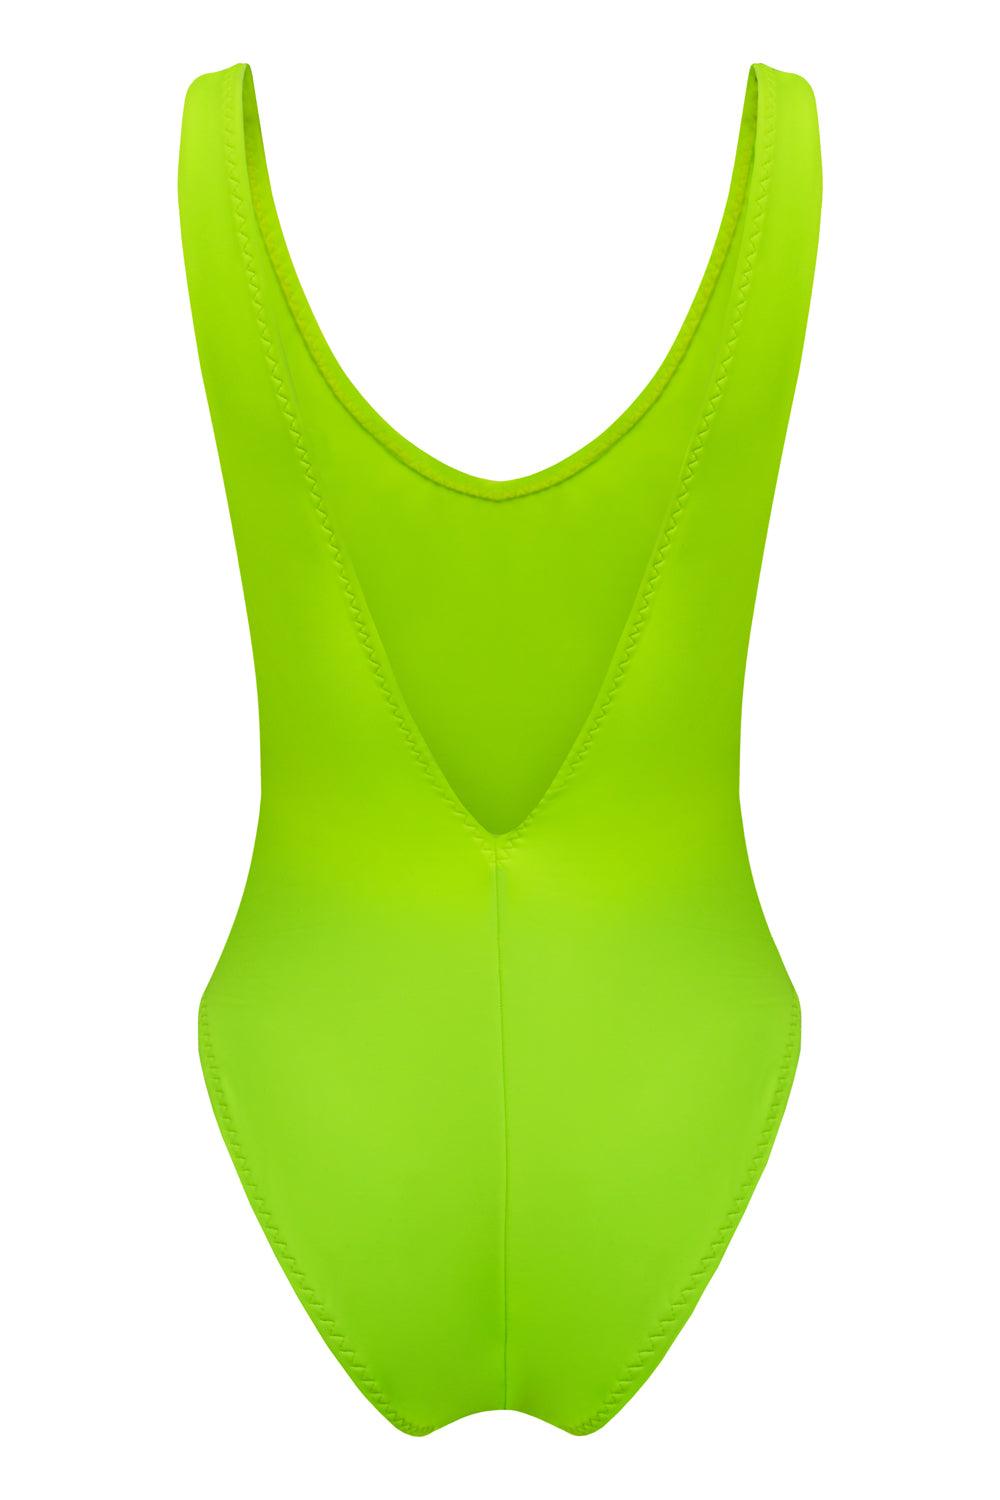 Mediana Greenery swimsuit – yesUndress